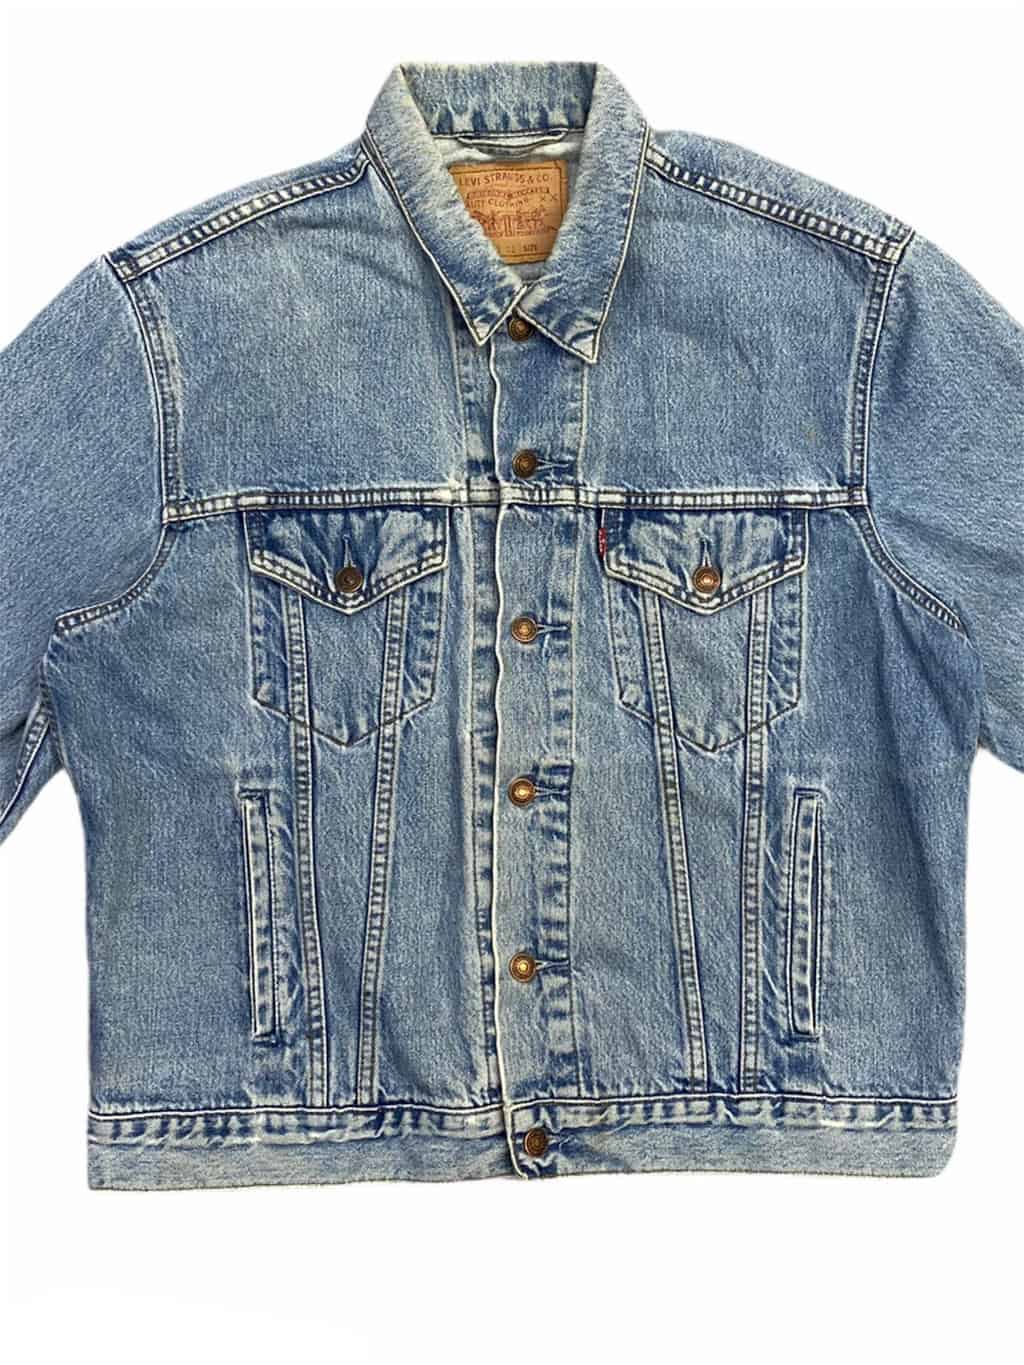 Vintage 90s Levis trucker jacket 70503 in stonewash blue denim with red tag  - Large - St Cyr Vintage